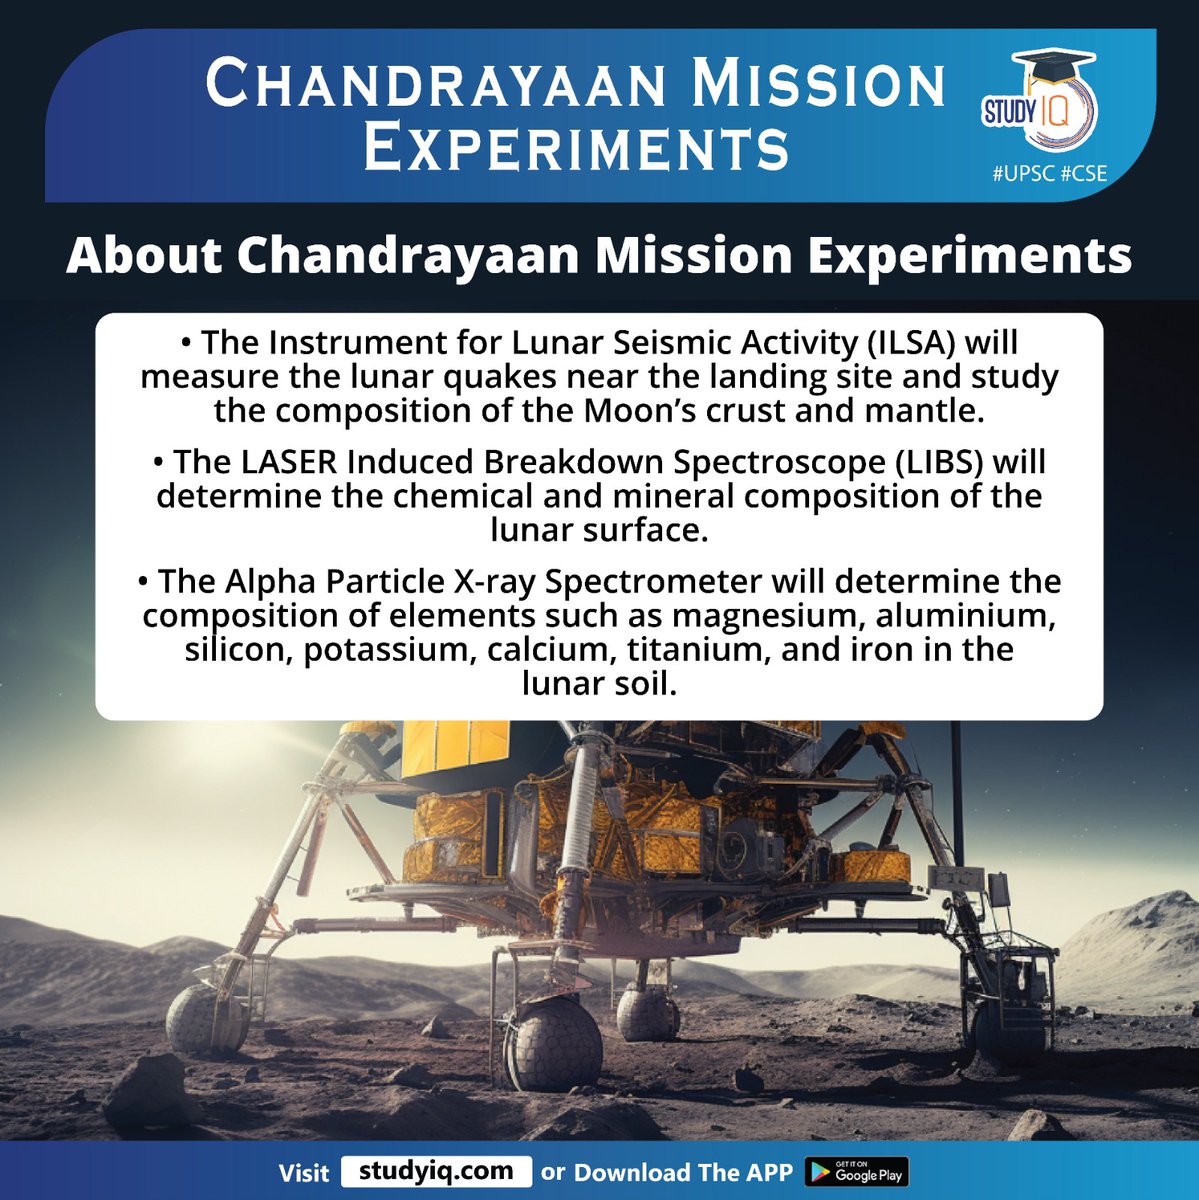 Chandrayaan Mission Experiments

#chandrayaan3 #chandrayaanmissionexperiments #moonmission #isro #lunarmission #whyinnews #rambha #chaste #polarregion #ilsa #moon #laser #libs #lunarsurface #lunarsoil #upsc #cse #ips #ias #spacemission #spacenews